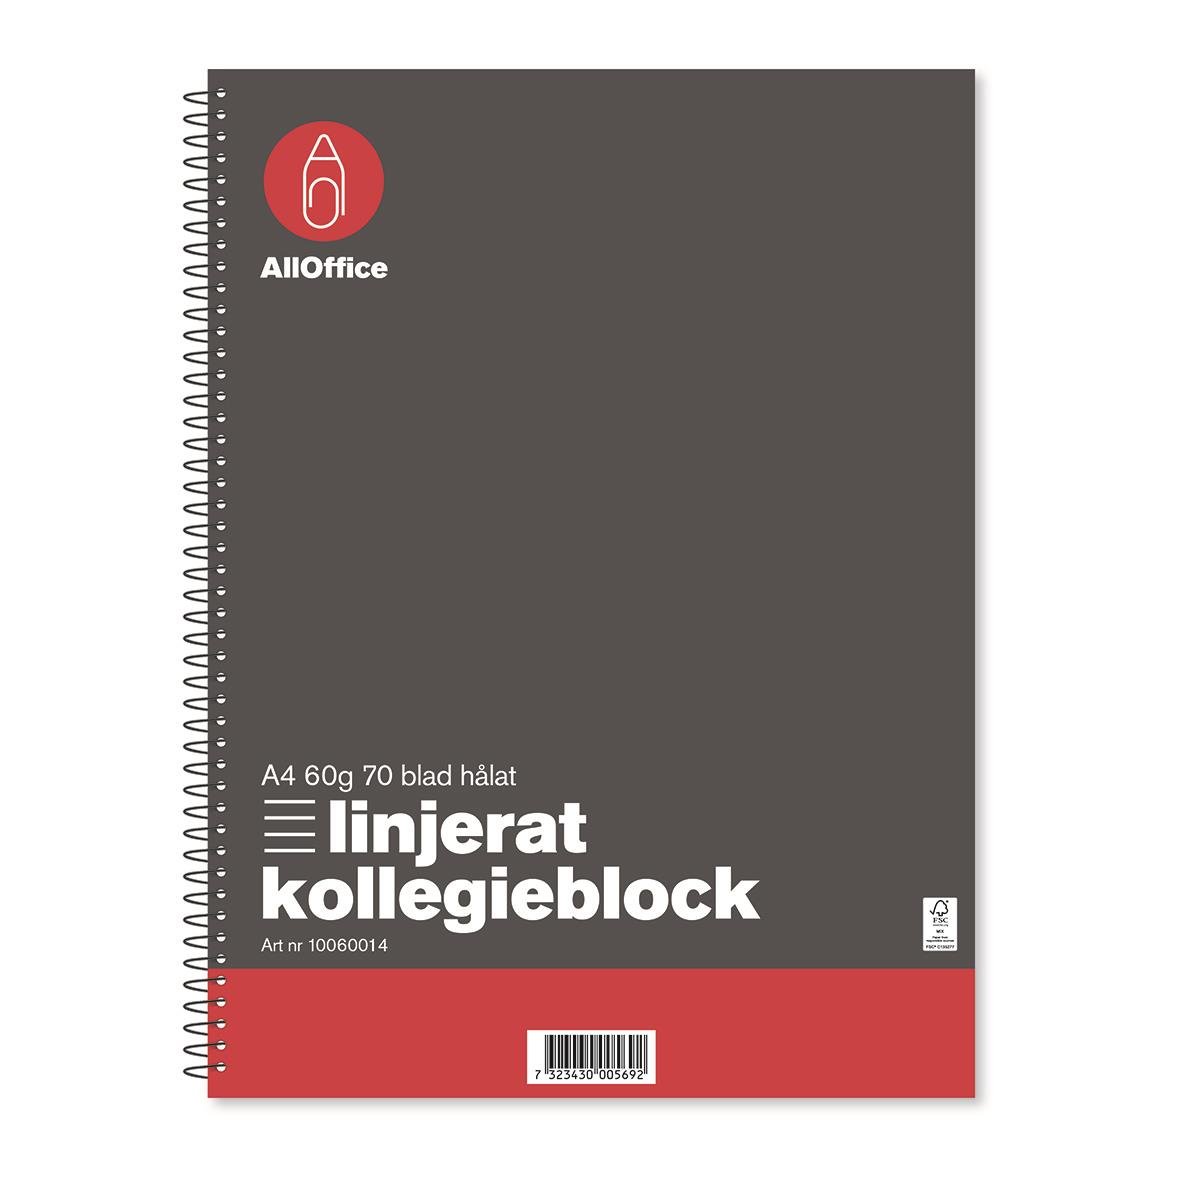 Kollegieblock AllOffice A4 60 gram